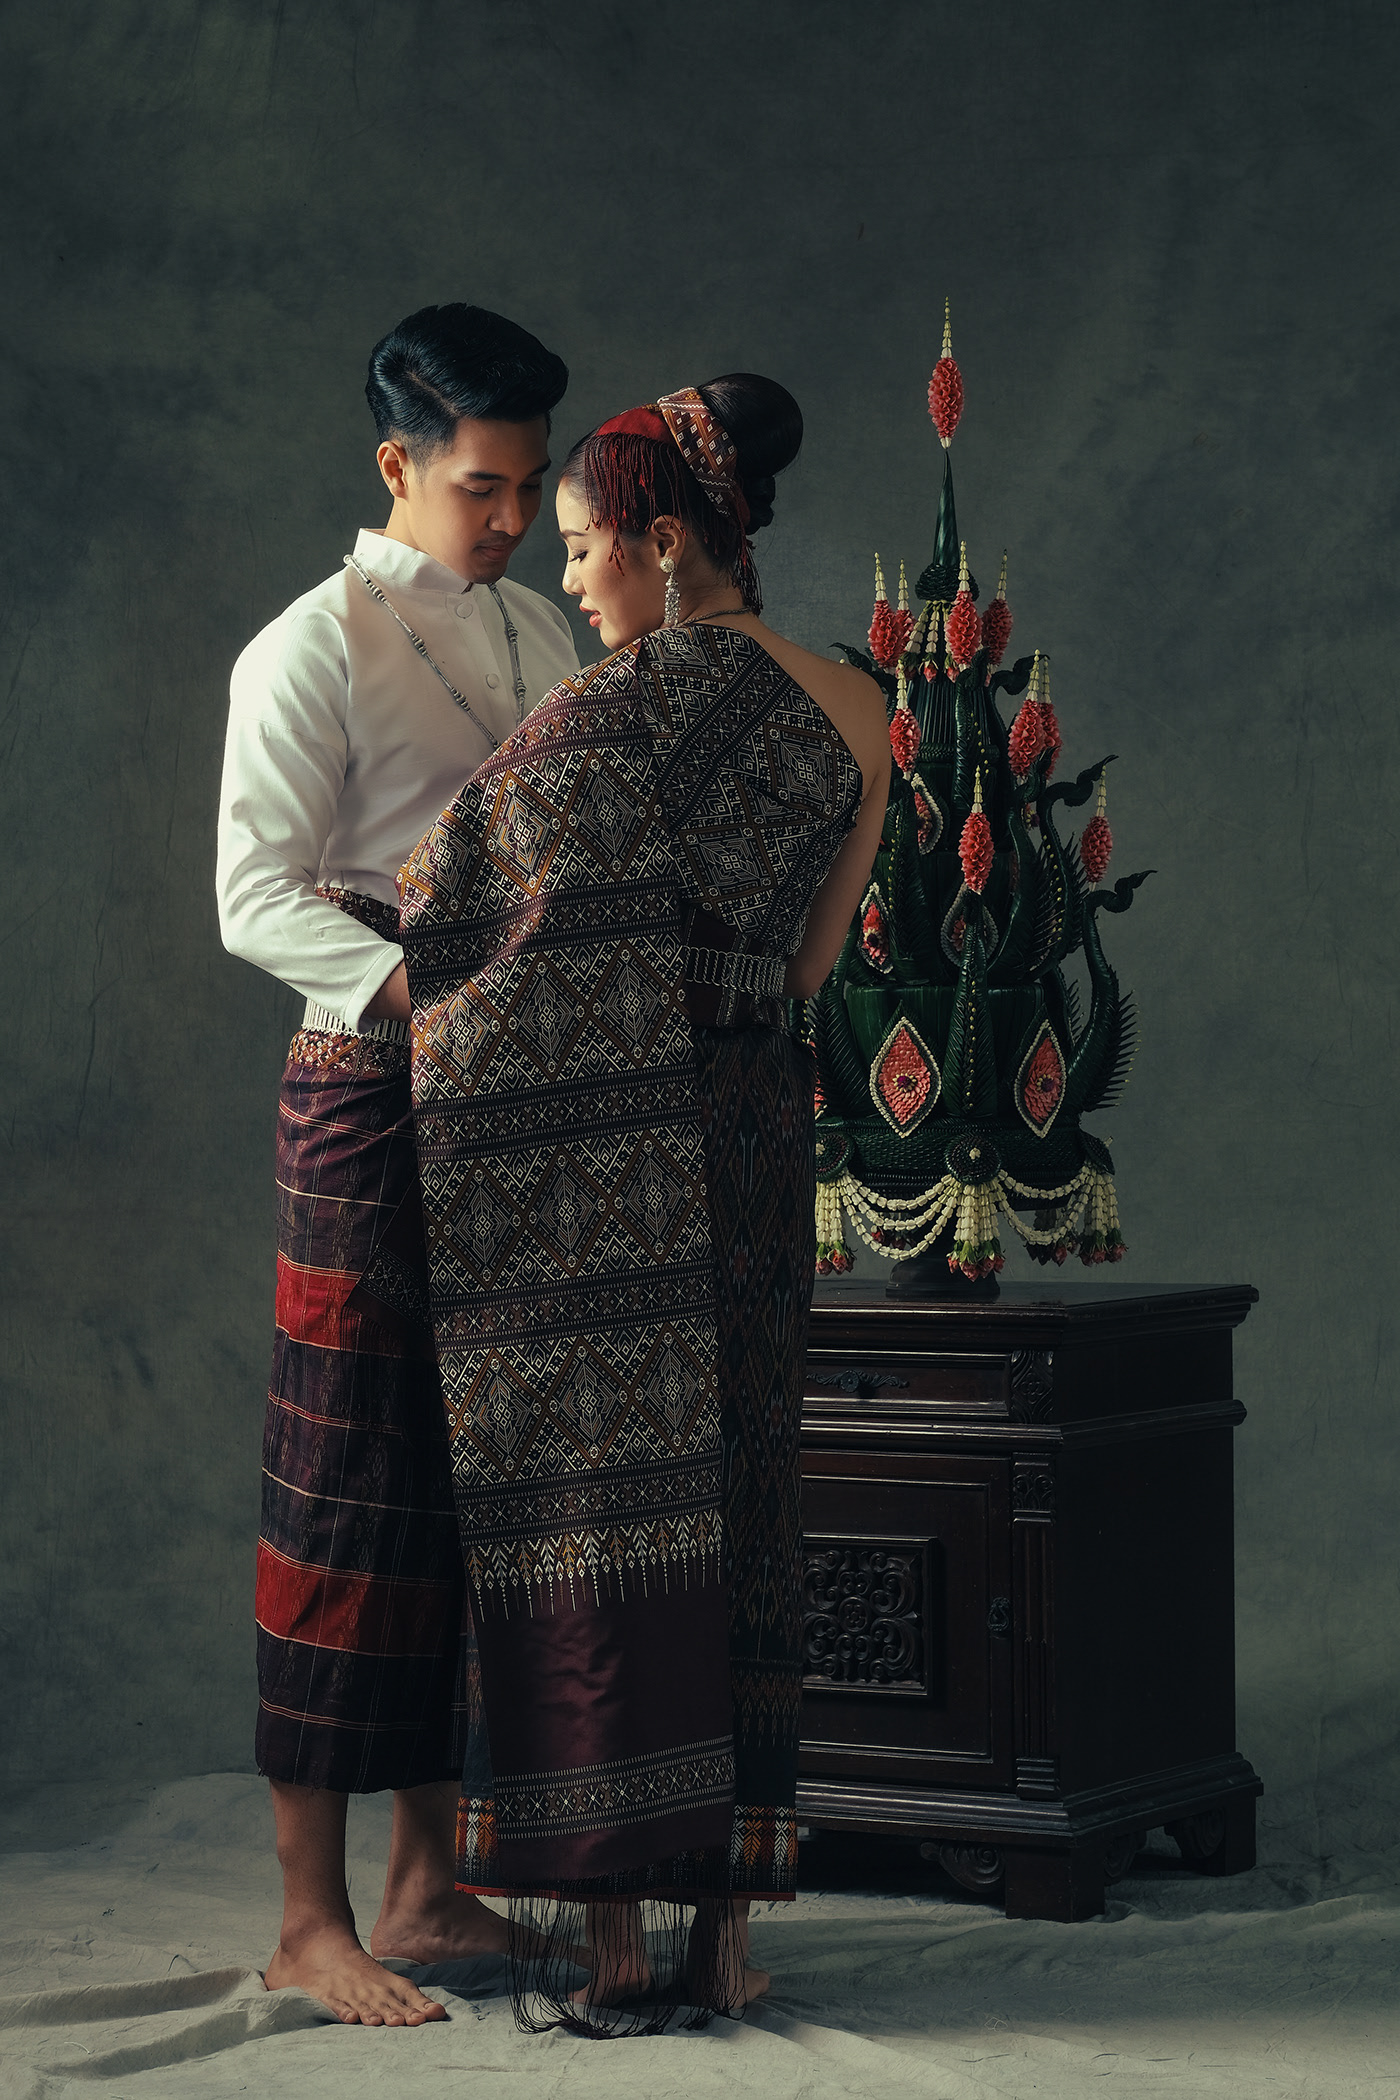 Esan-Thai traditional wedding costumes by Lamoonnee on Behance